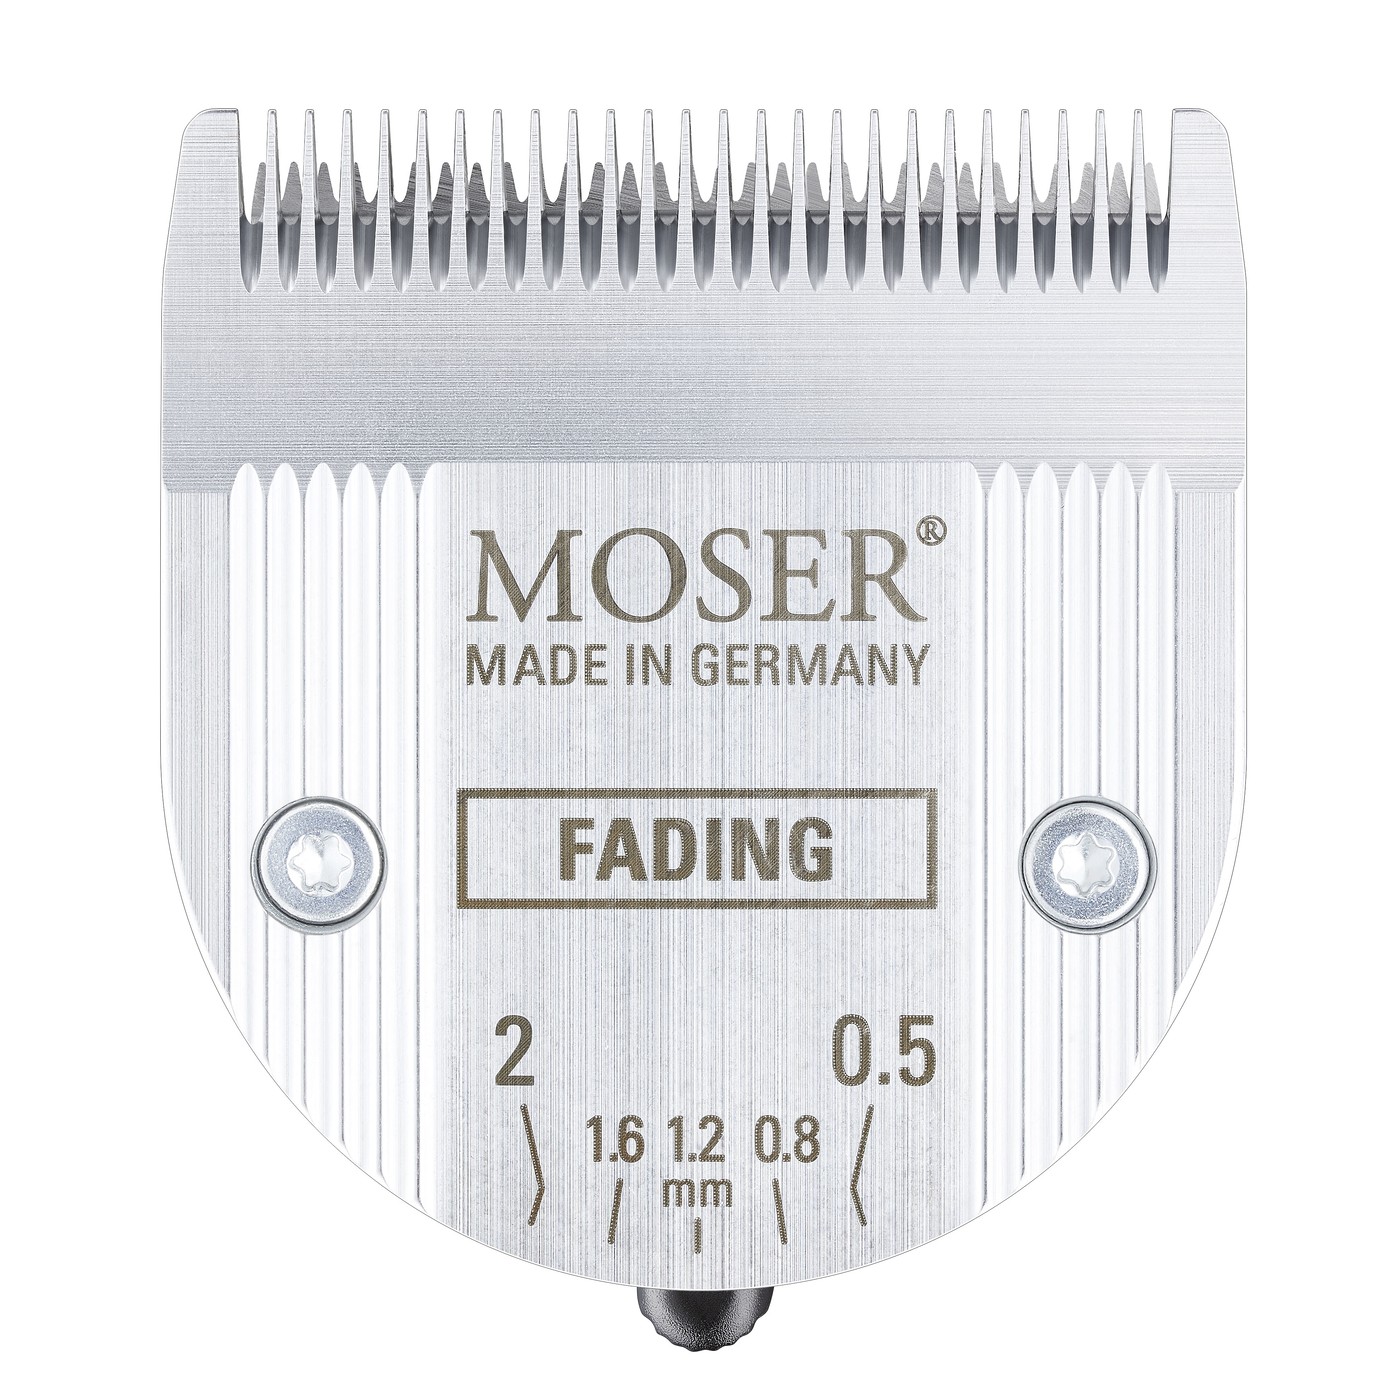 Střihací hlavice MOSER 1887-7020 Fading Blade